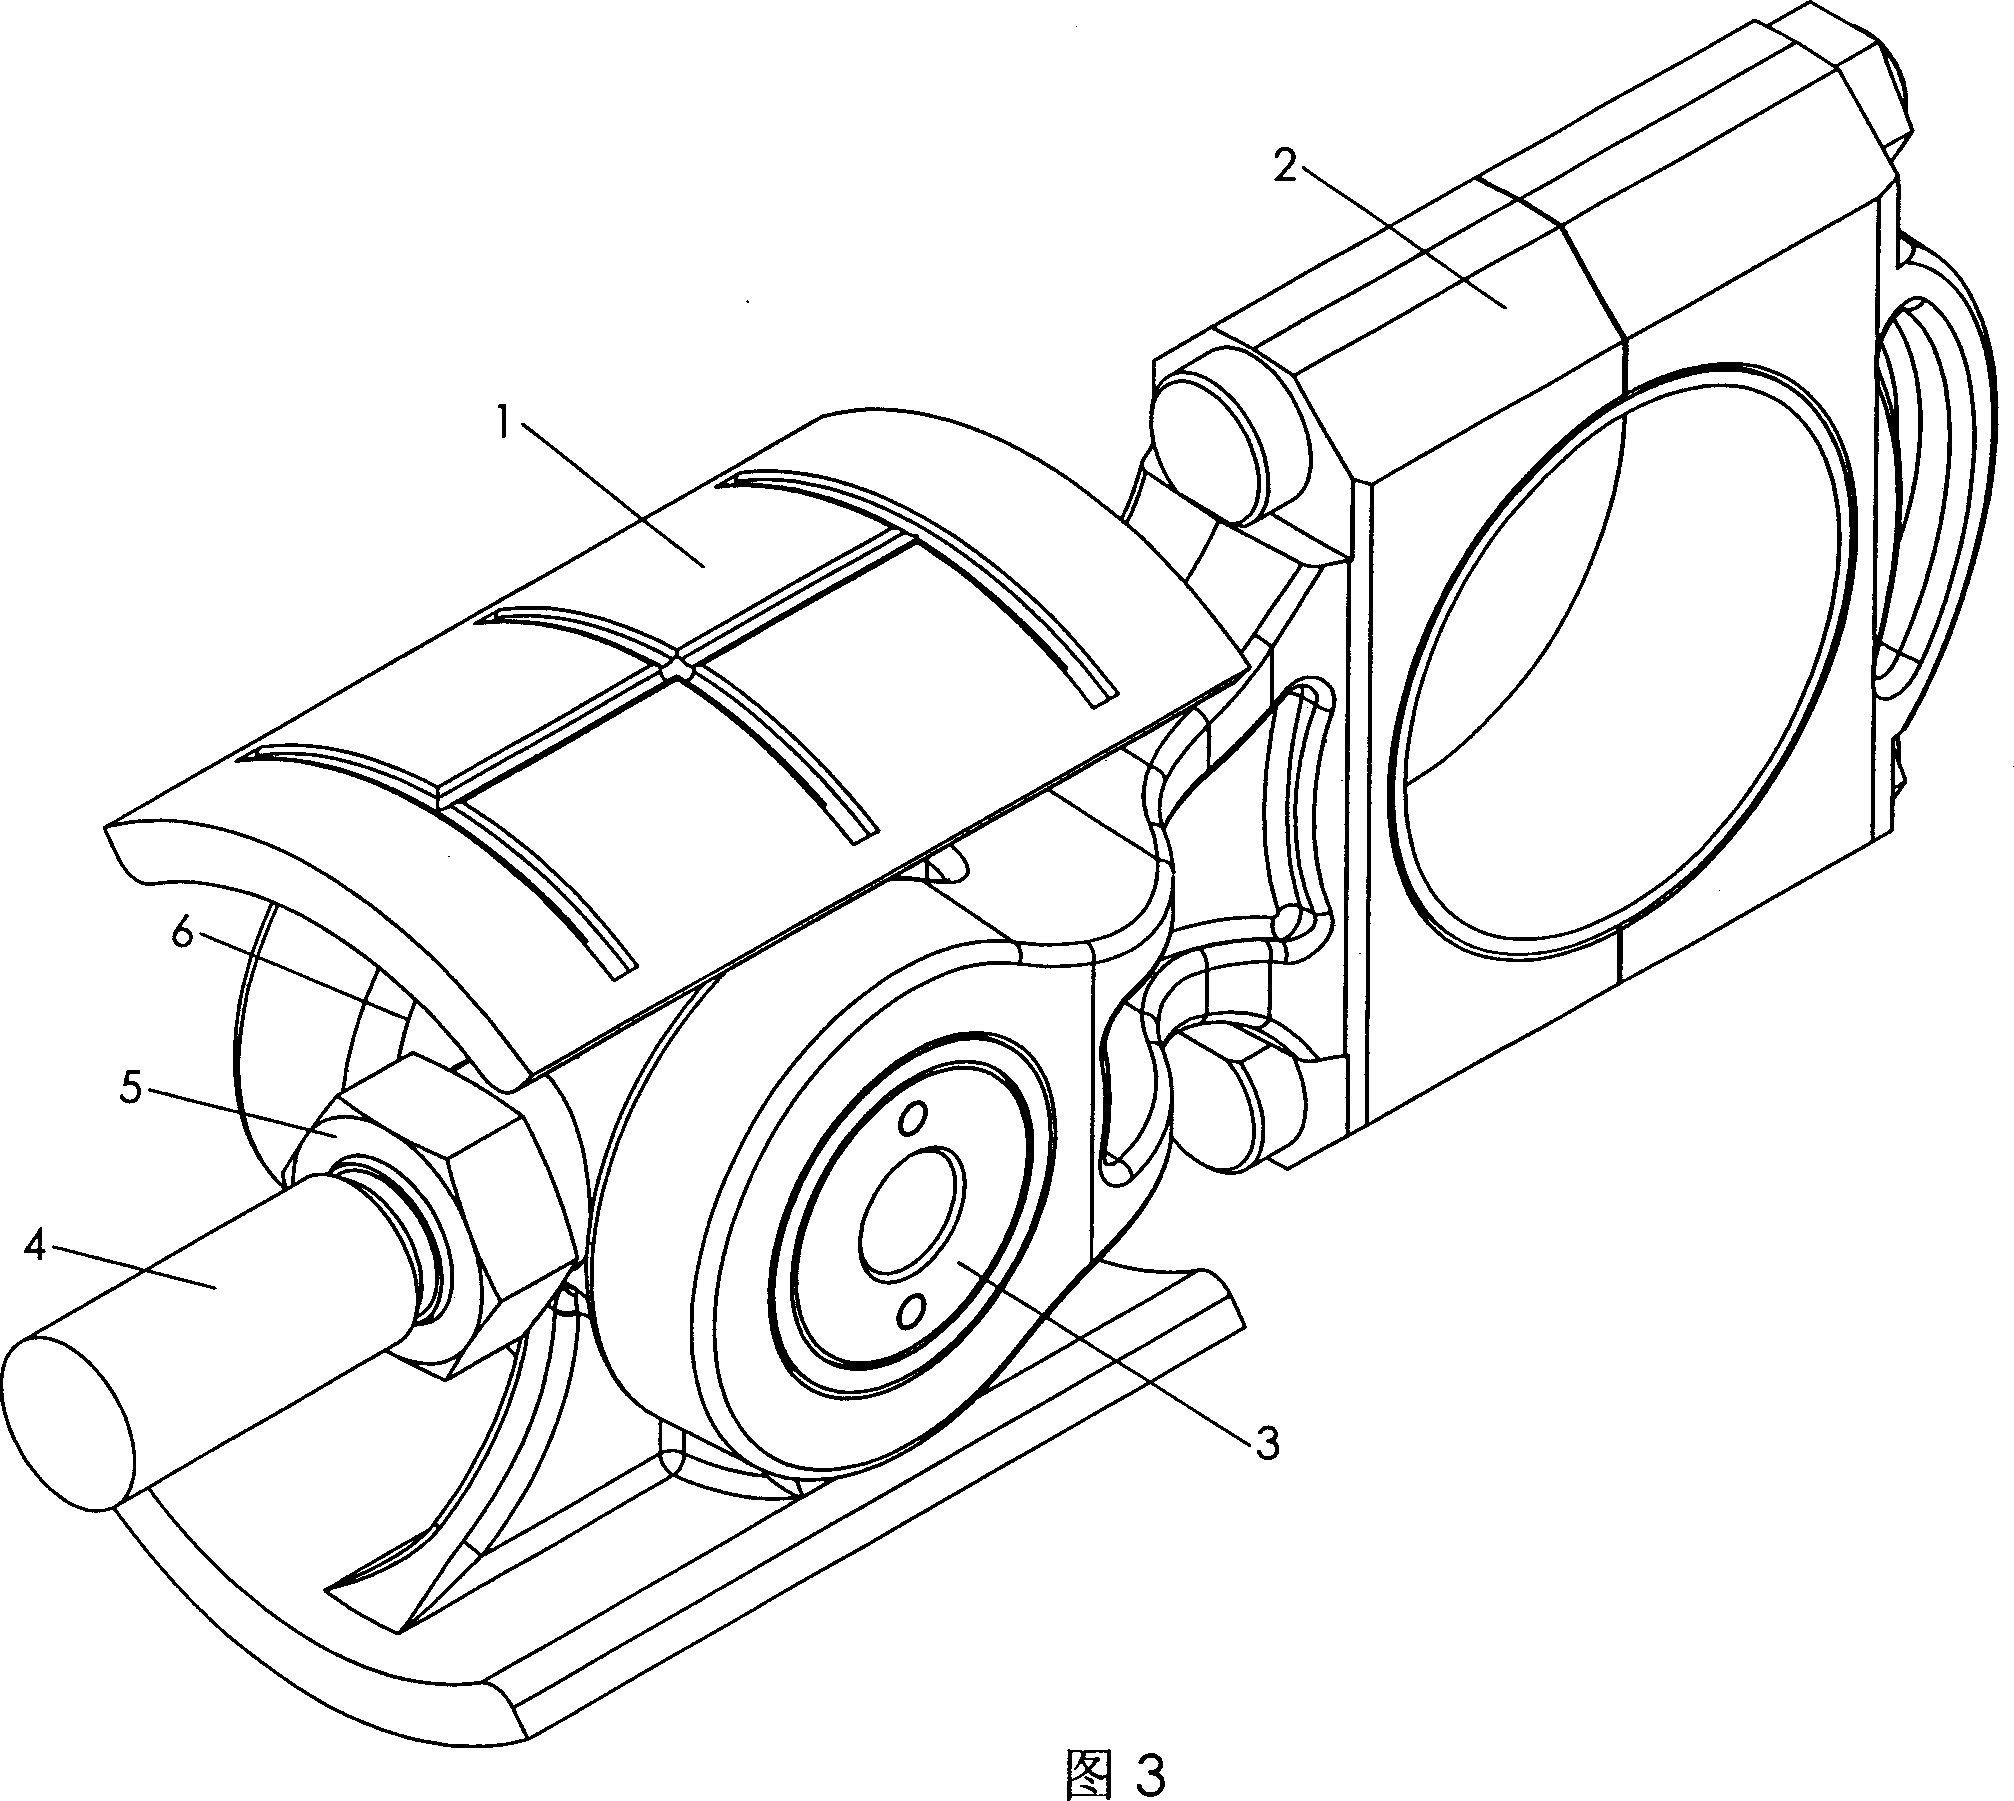 Cross head of crank rod type piston compressor